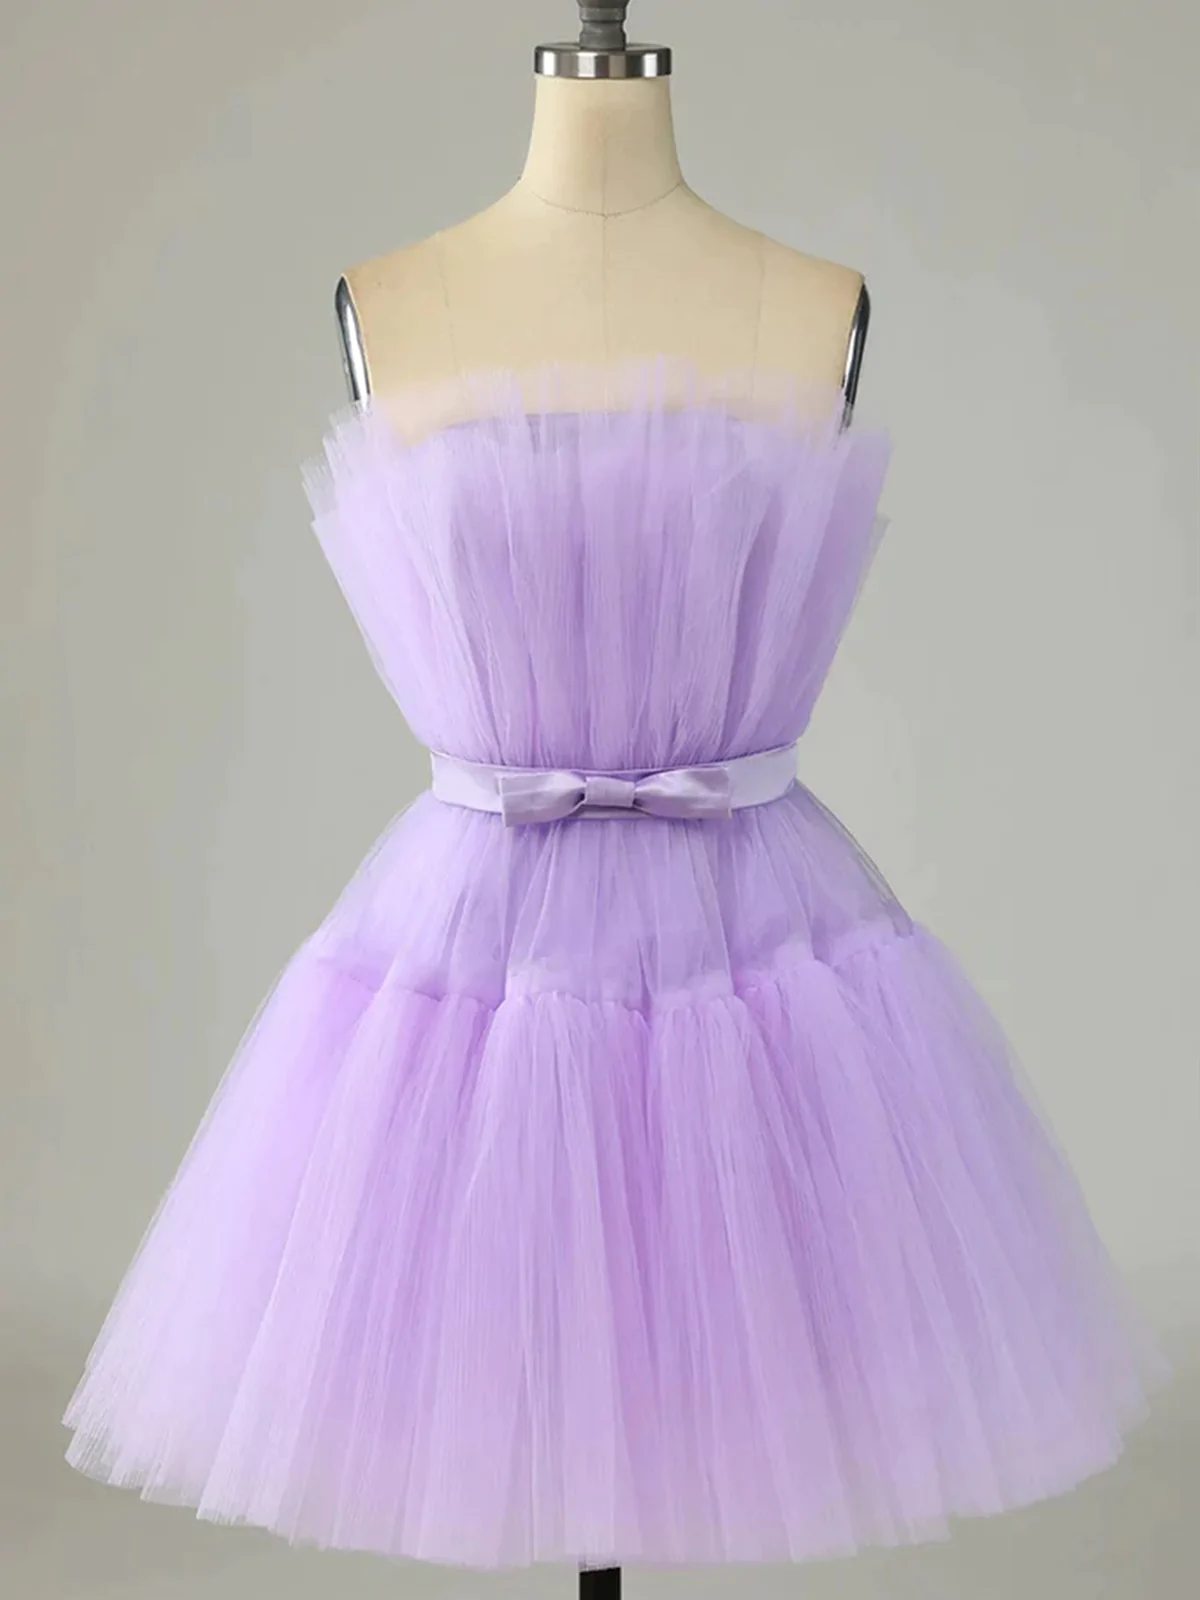 Short Purple Strapless Tulle Prom Dresses Graduation Homecoming Dresses Sa1000